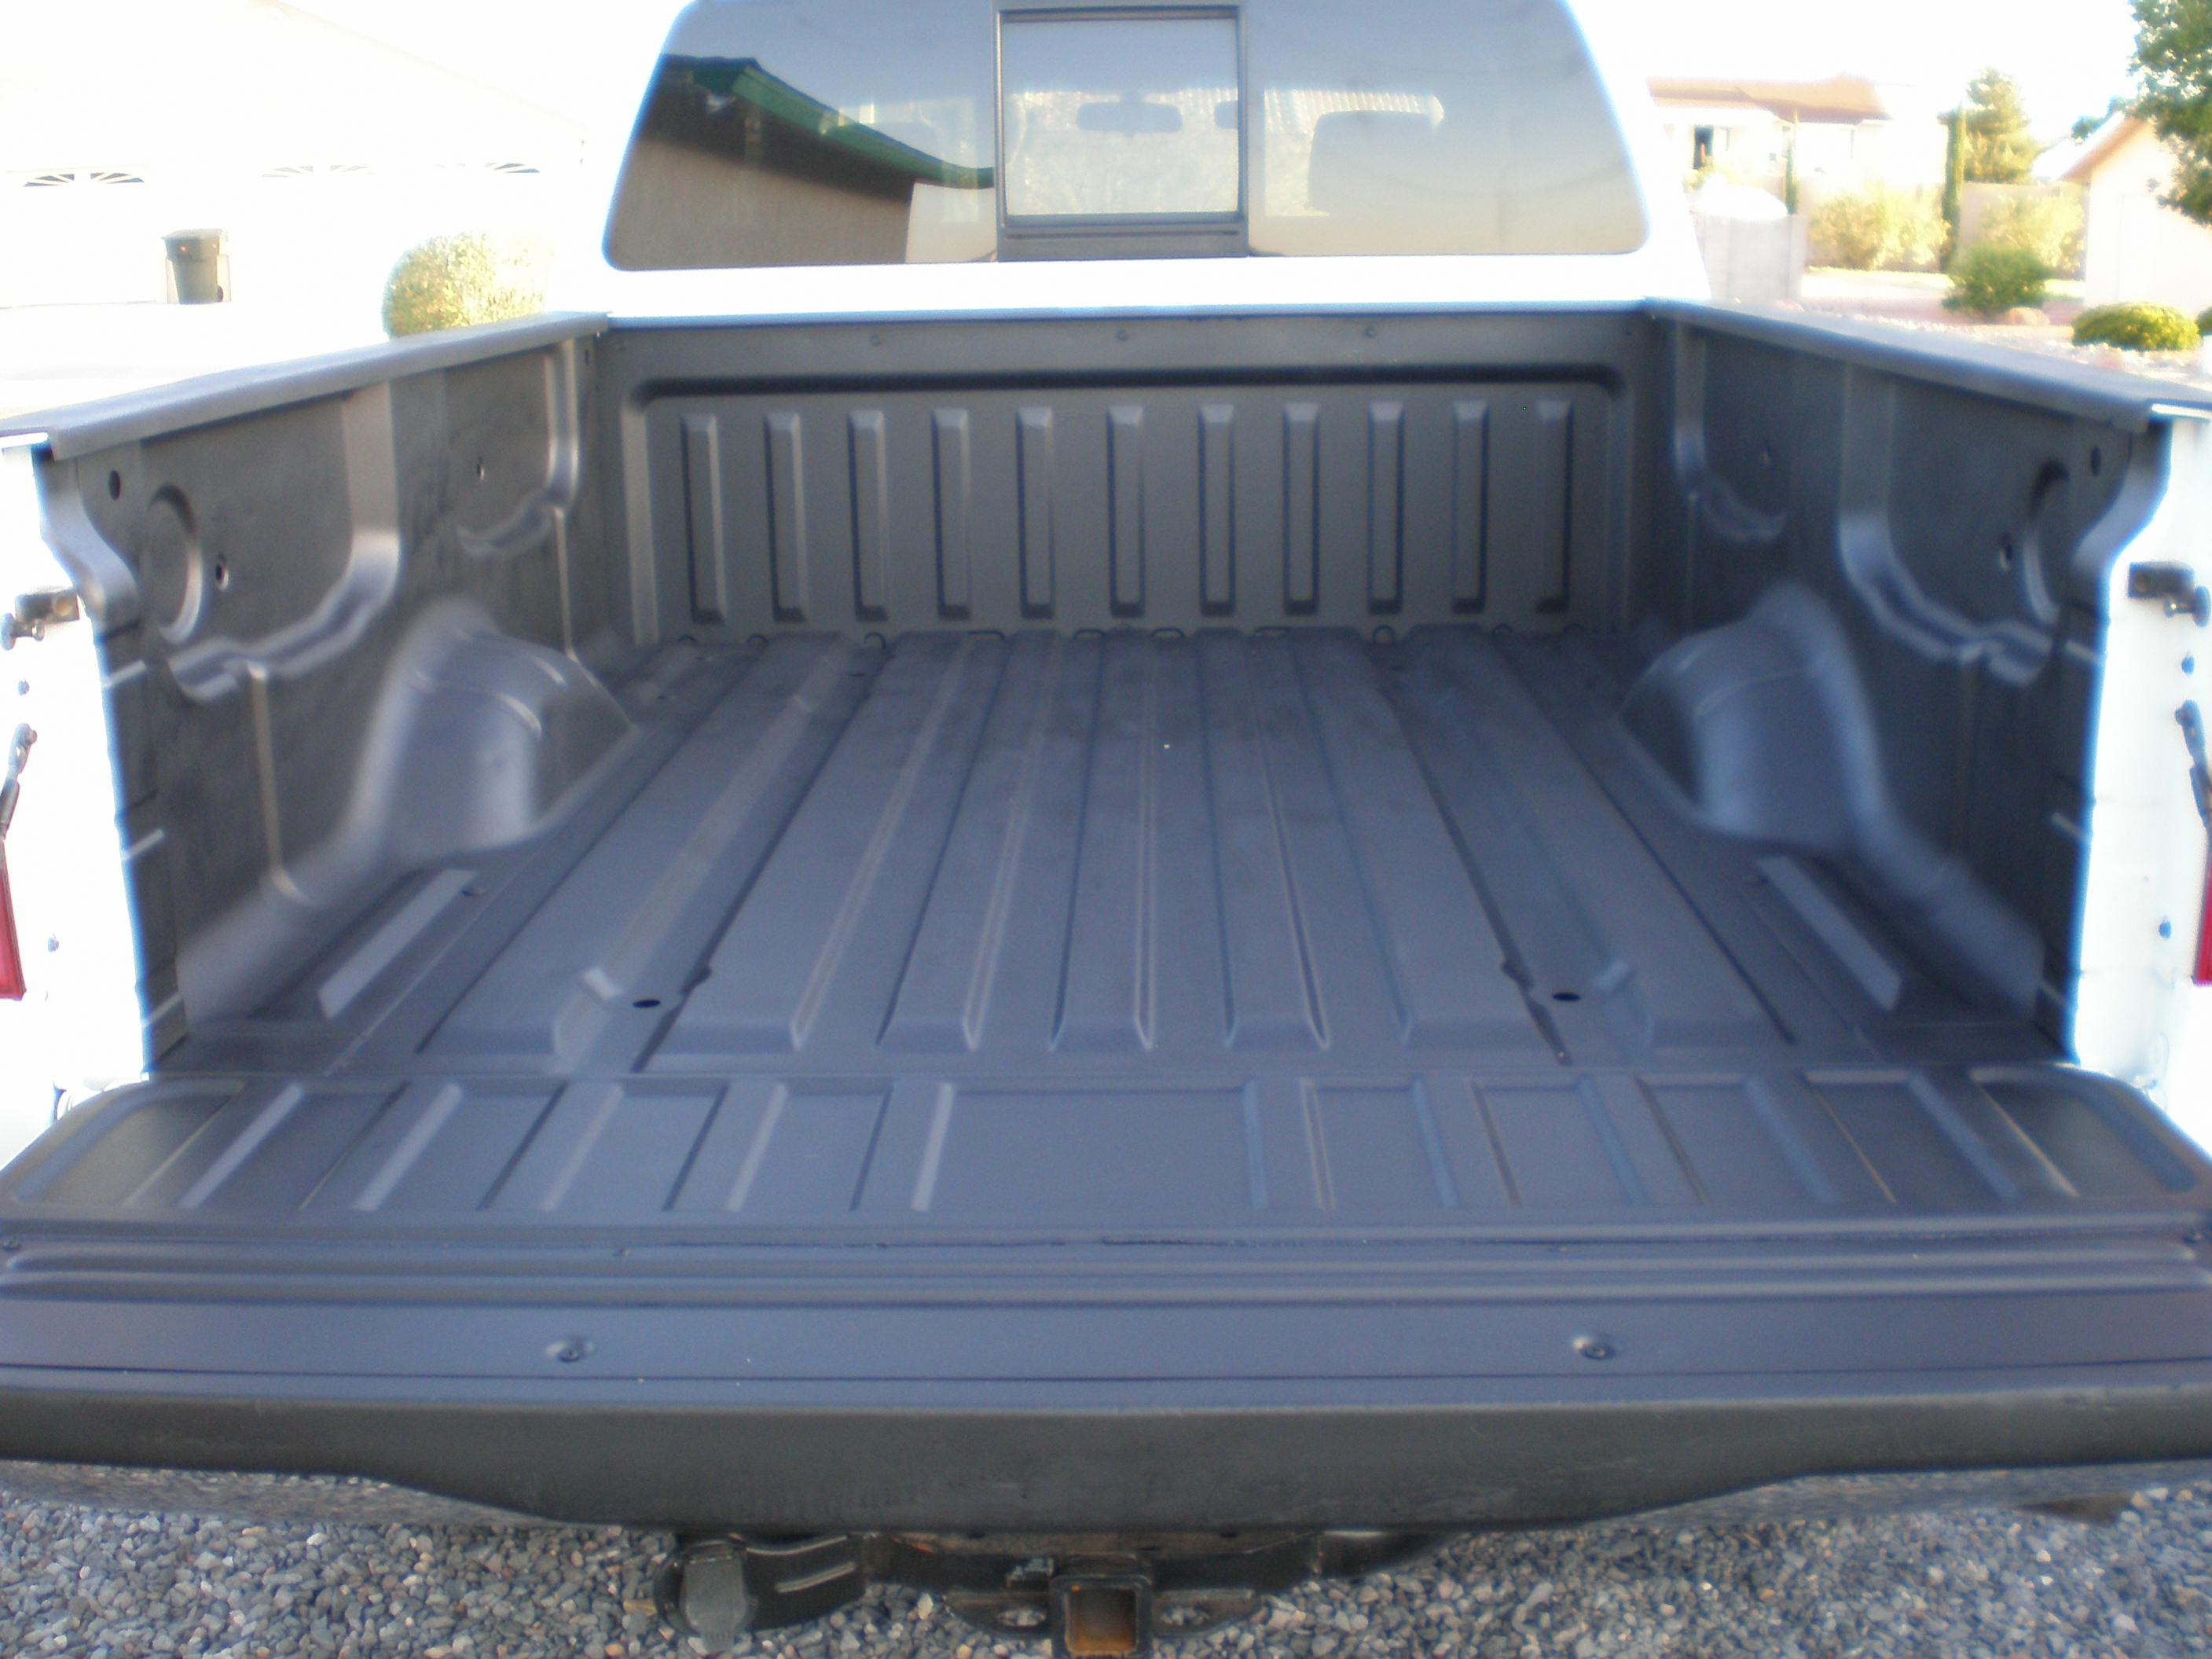 Best ideas about DIY Truck Bed Liner
. Save or Pin DIY bedliner installed Nissan Titan Forum Now.